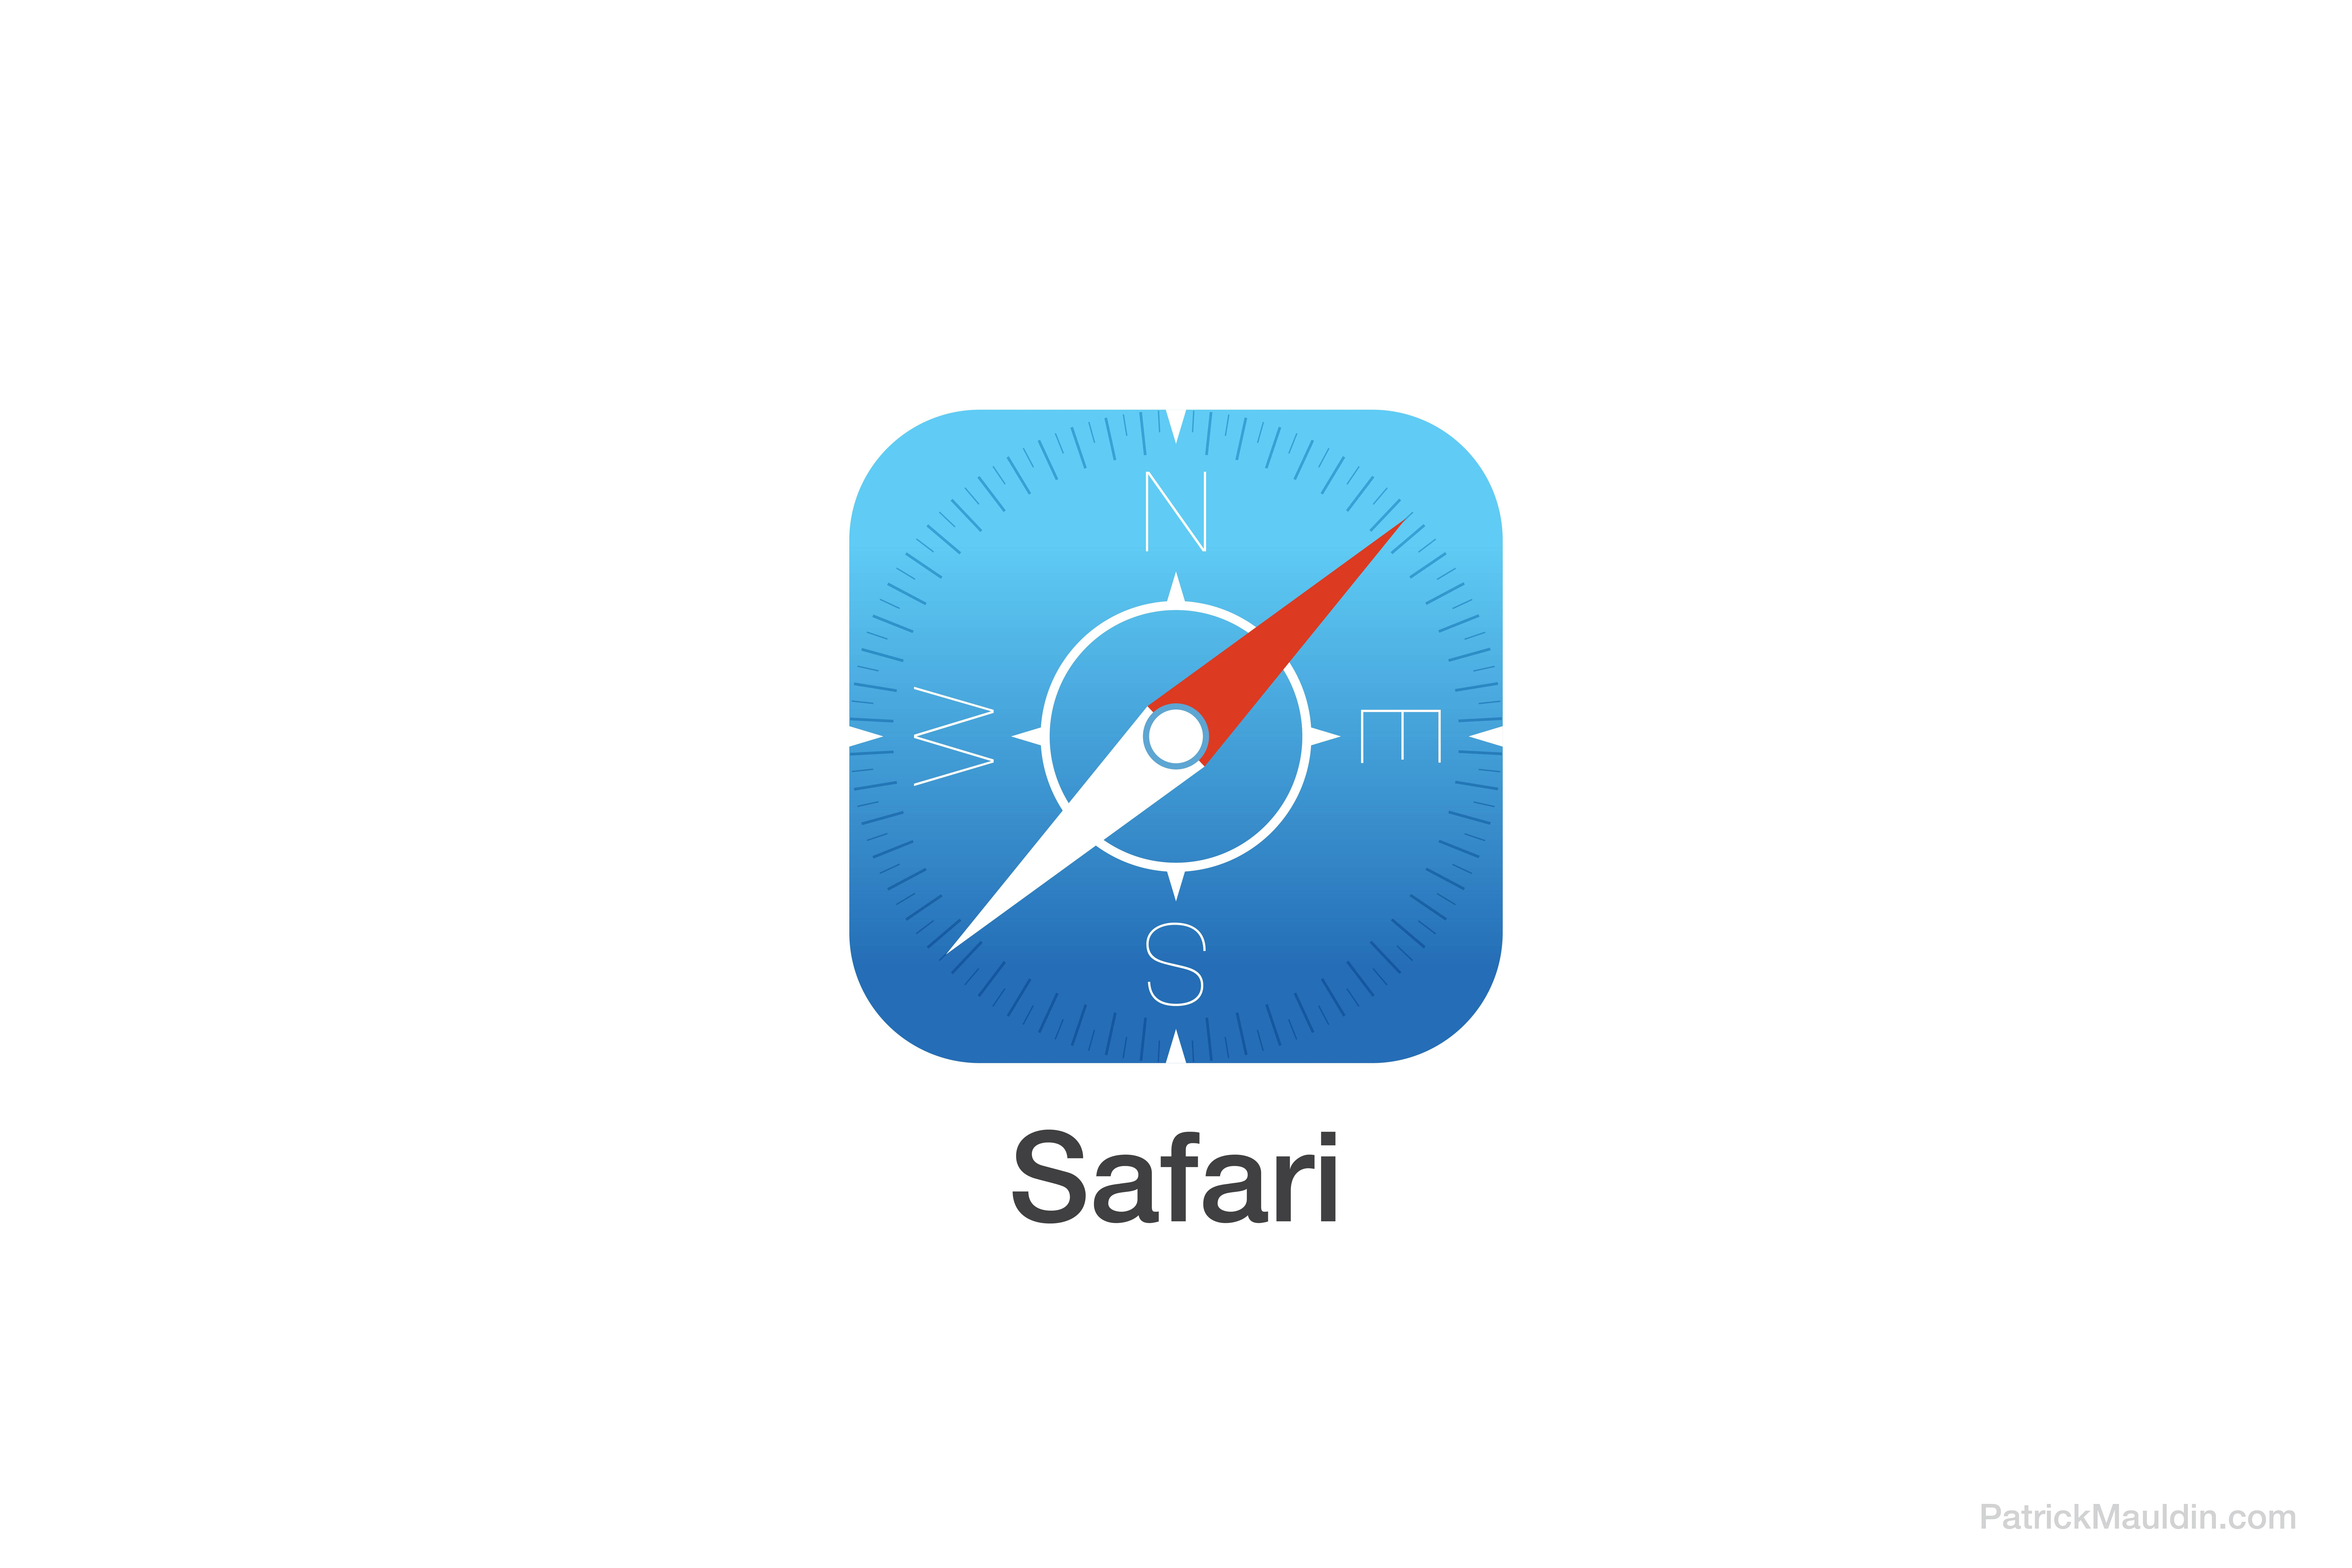 Old Safari Logo - I redesigned the new iOS 7 Safari icon. What do you think? : apple